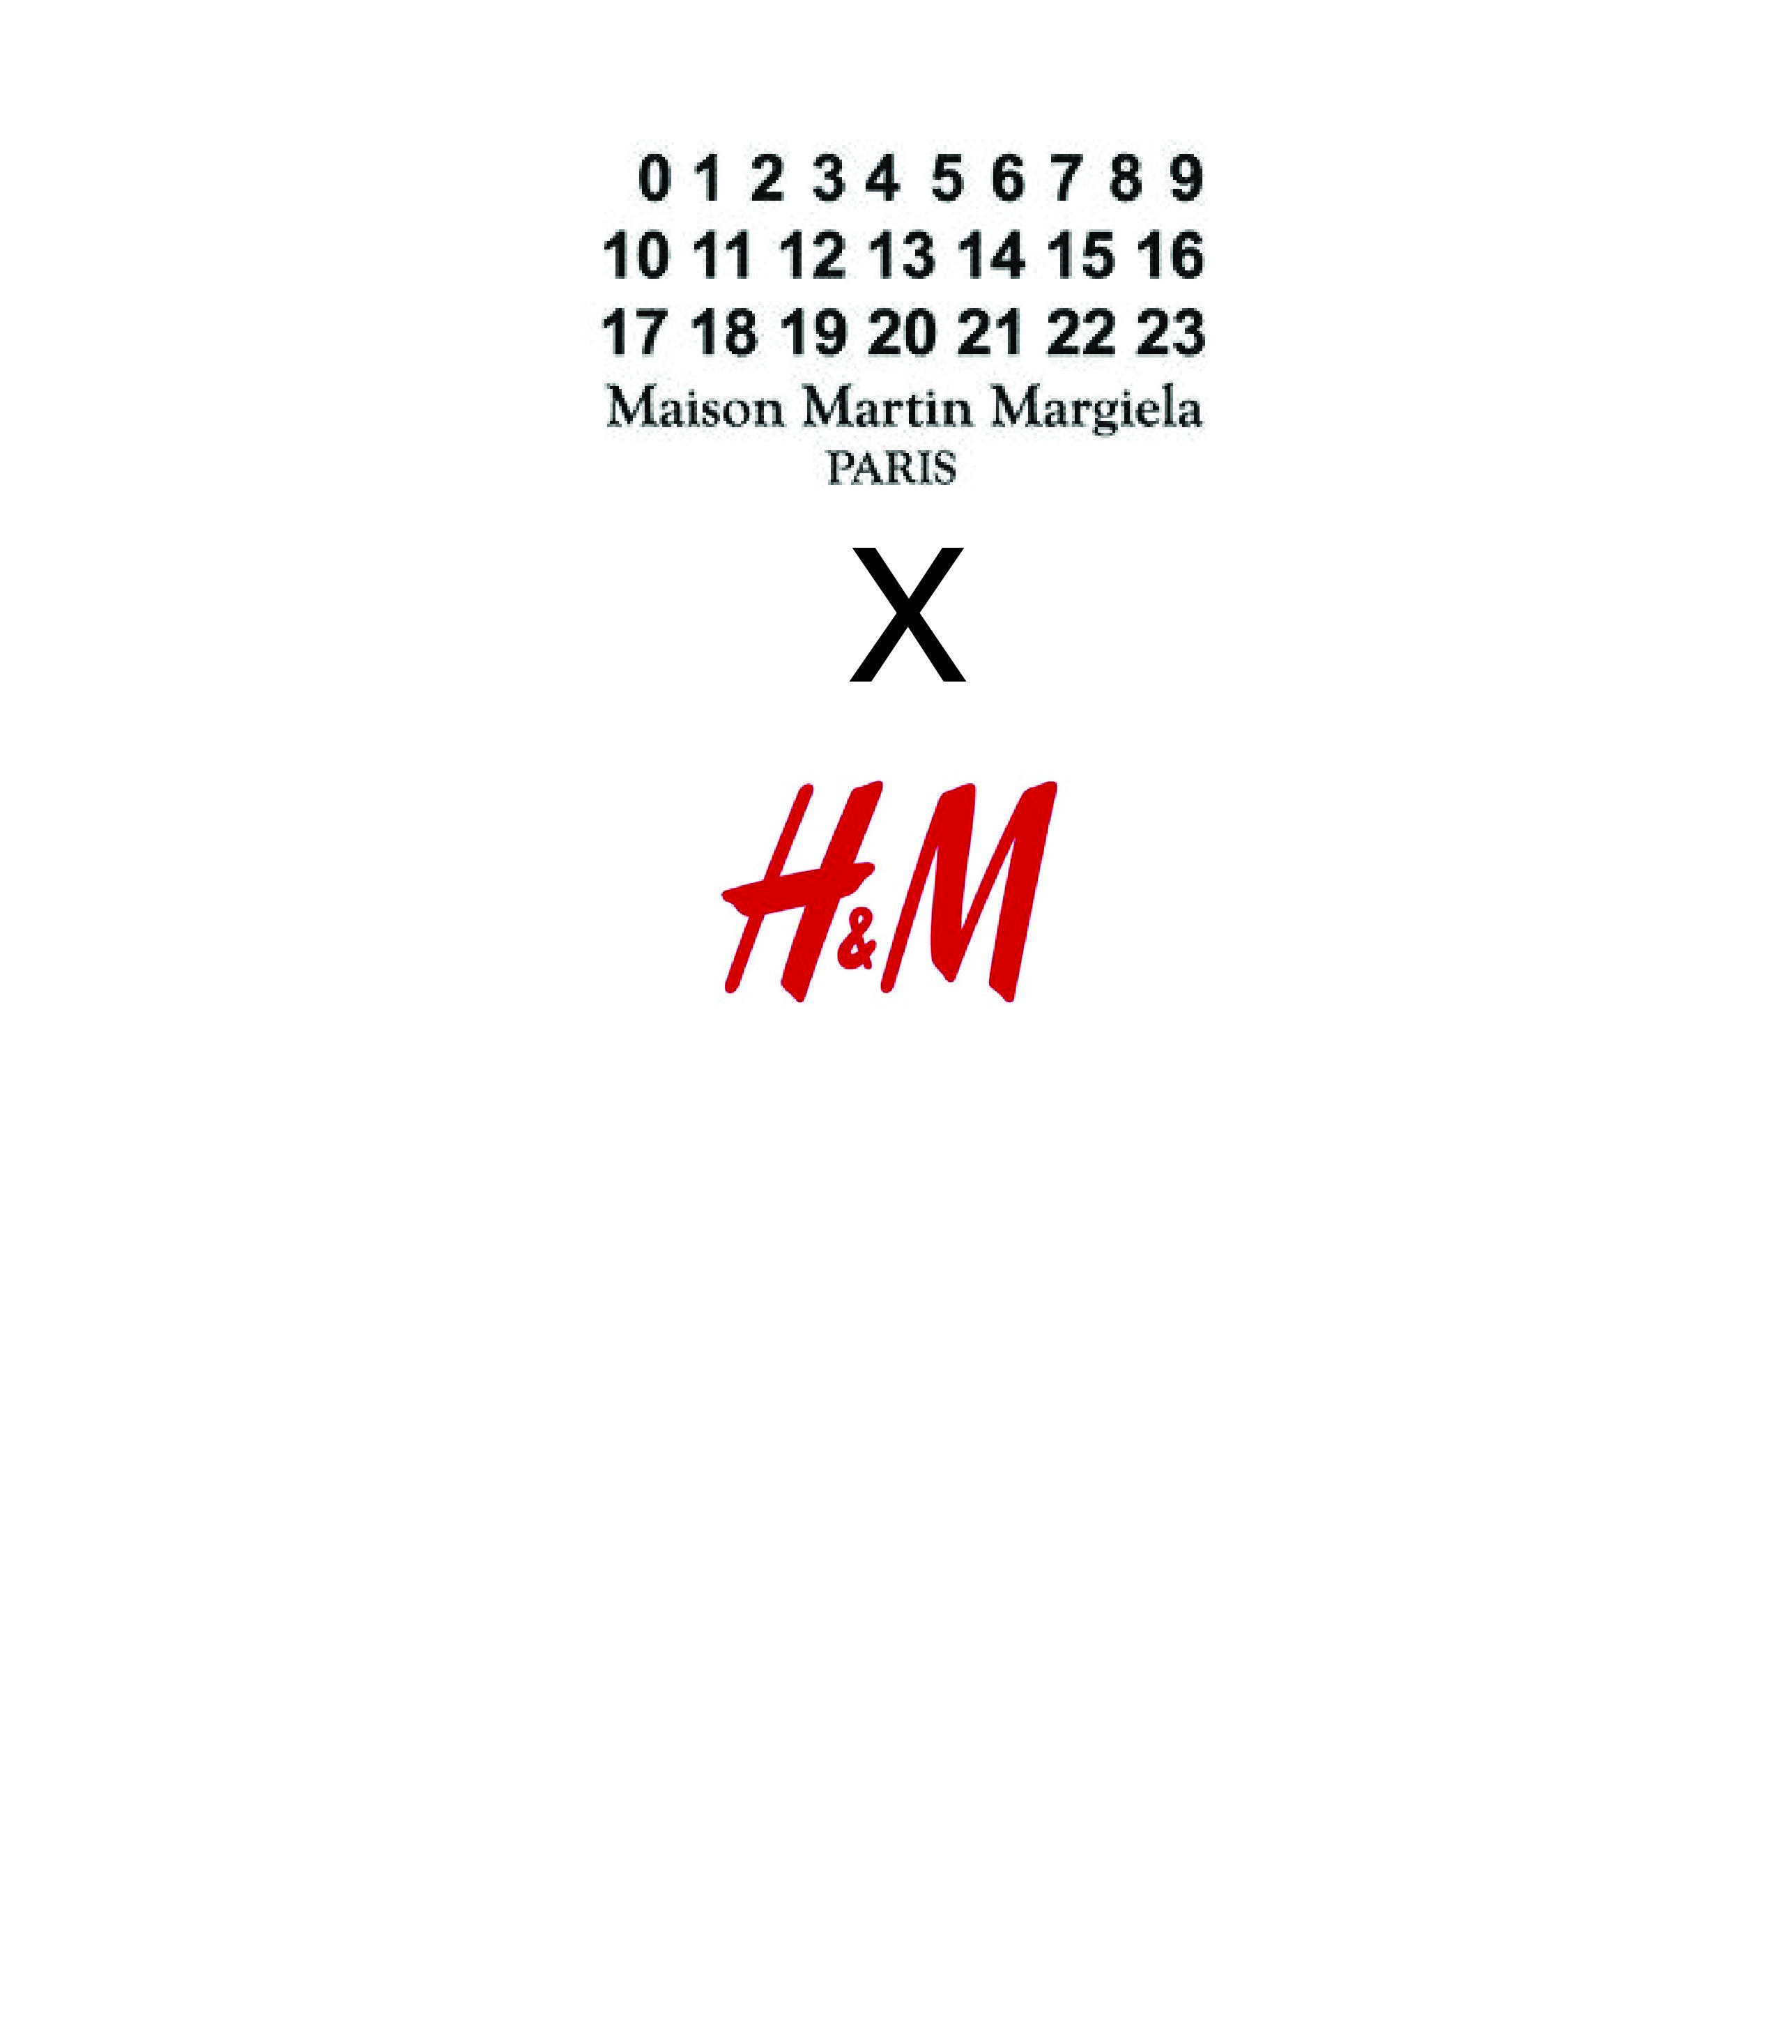 Maison Martin Margiela Logo - H&M X Maison Martin Margiela. Fashionartisan's Blog